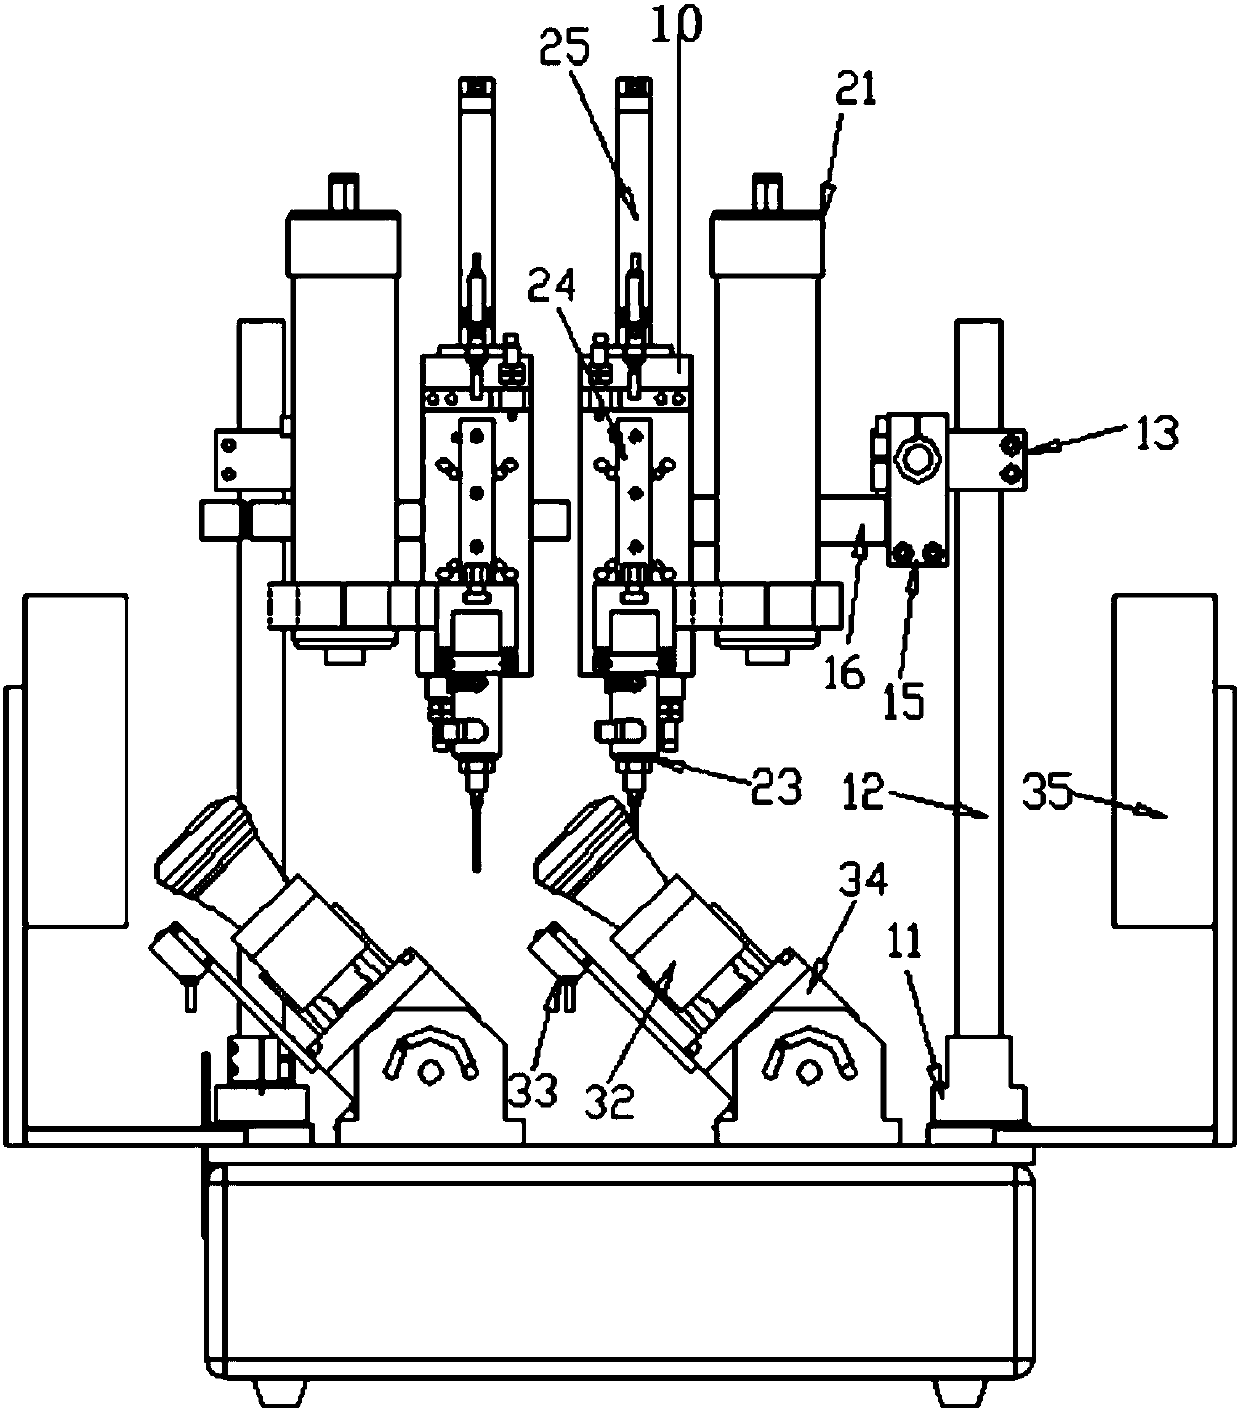 Double-head annular dispensing mechanism